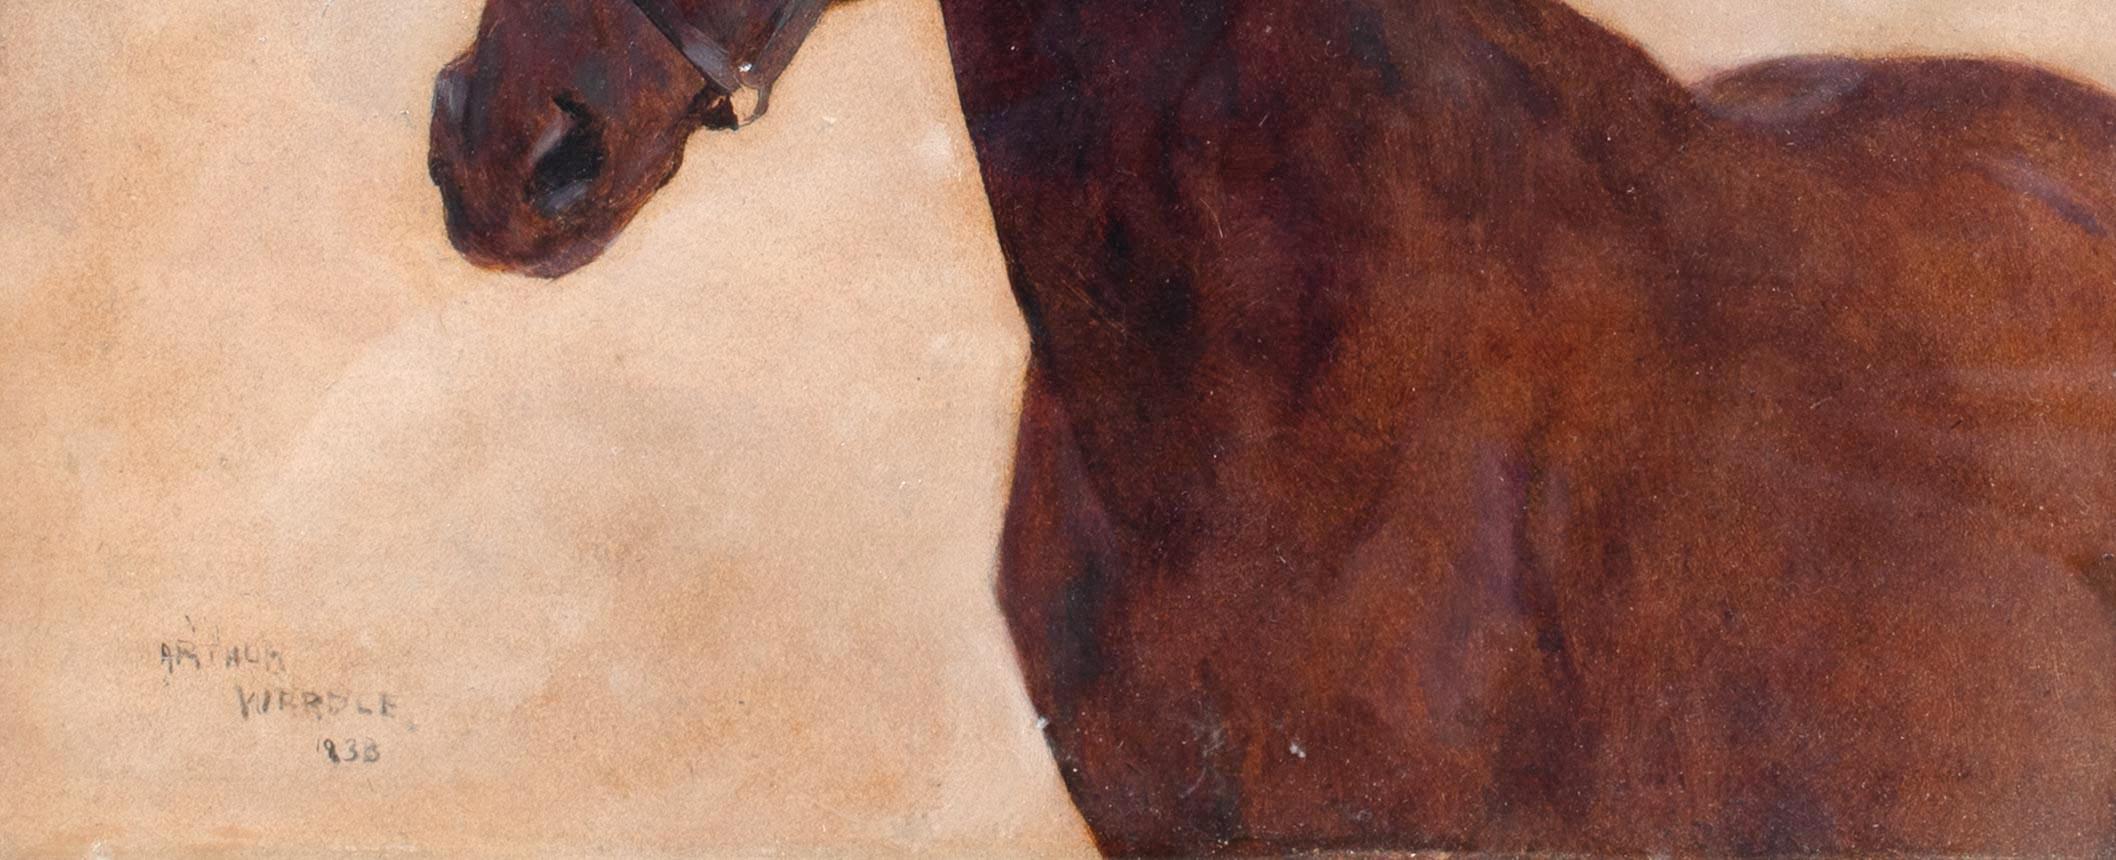 Portrait of A Horse, 19th Century  by Arthur WARDLE (1864-1949)   2